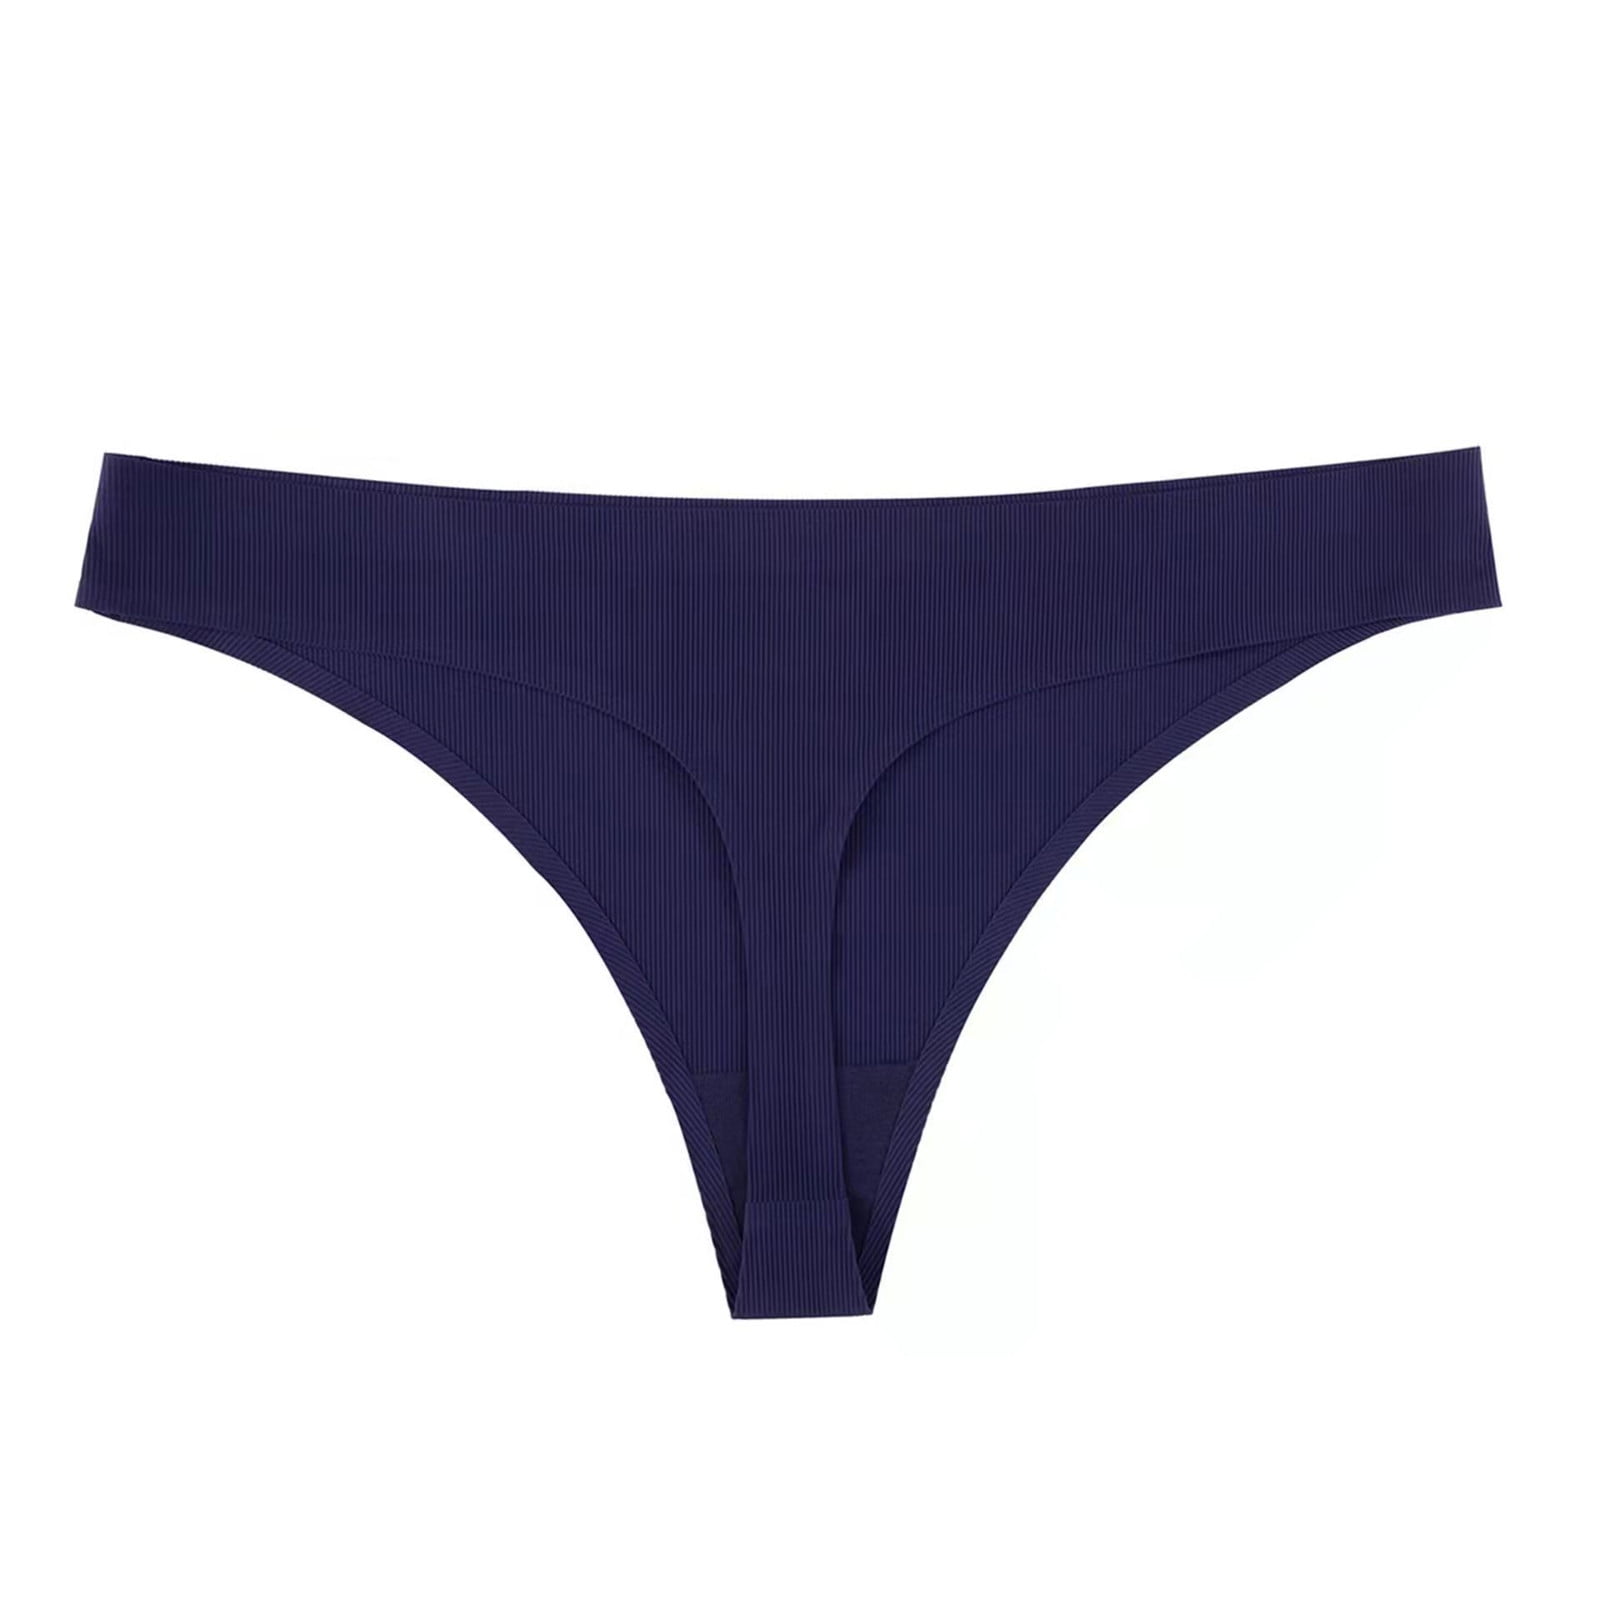 CBGELRT Underwear Women Transparent Women's Panties Seamless Ice